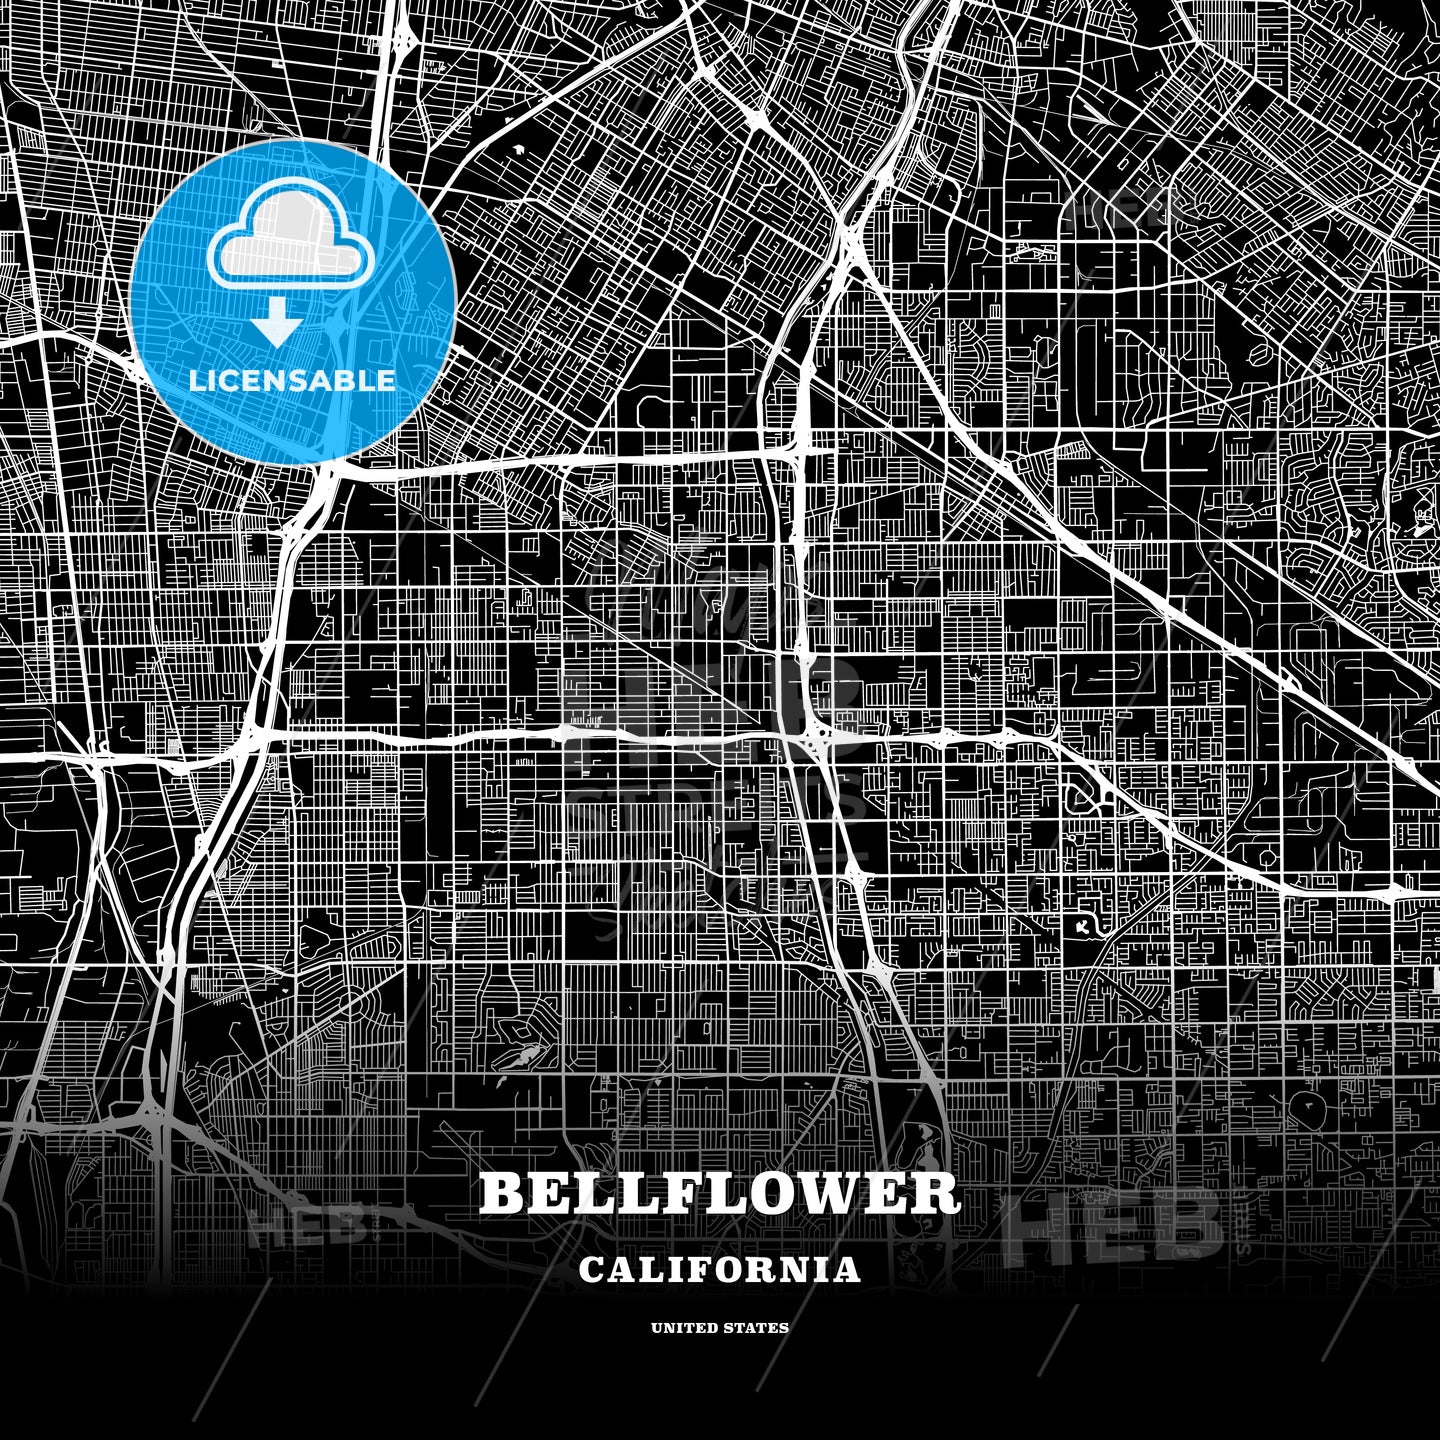 Bellflower, California, USA map